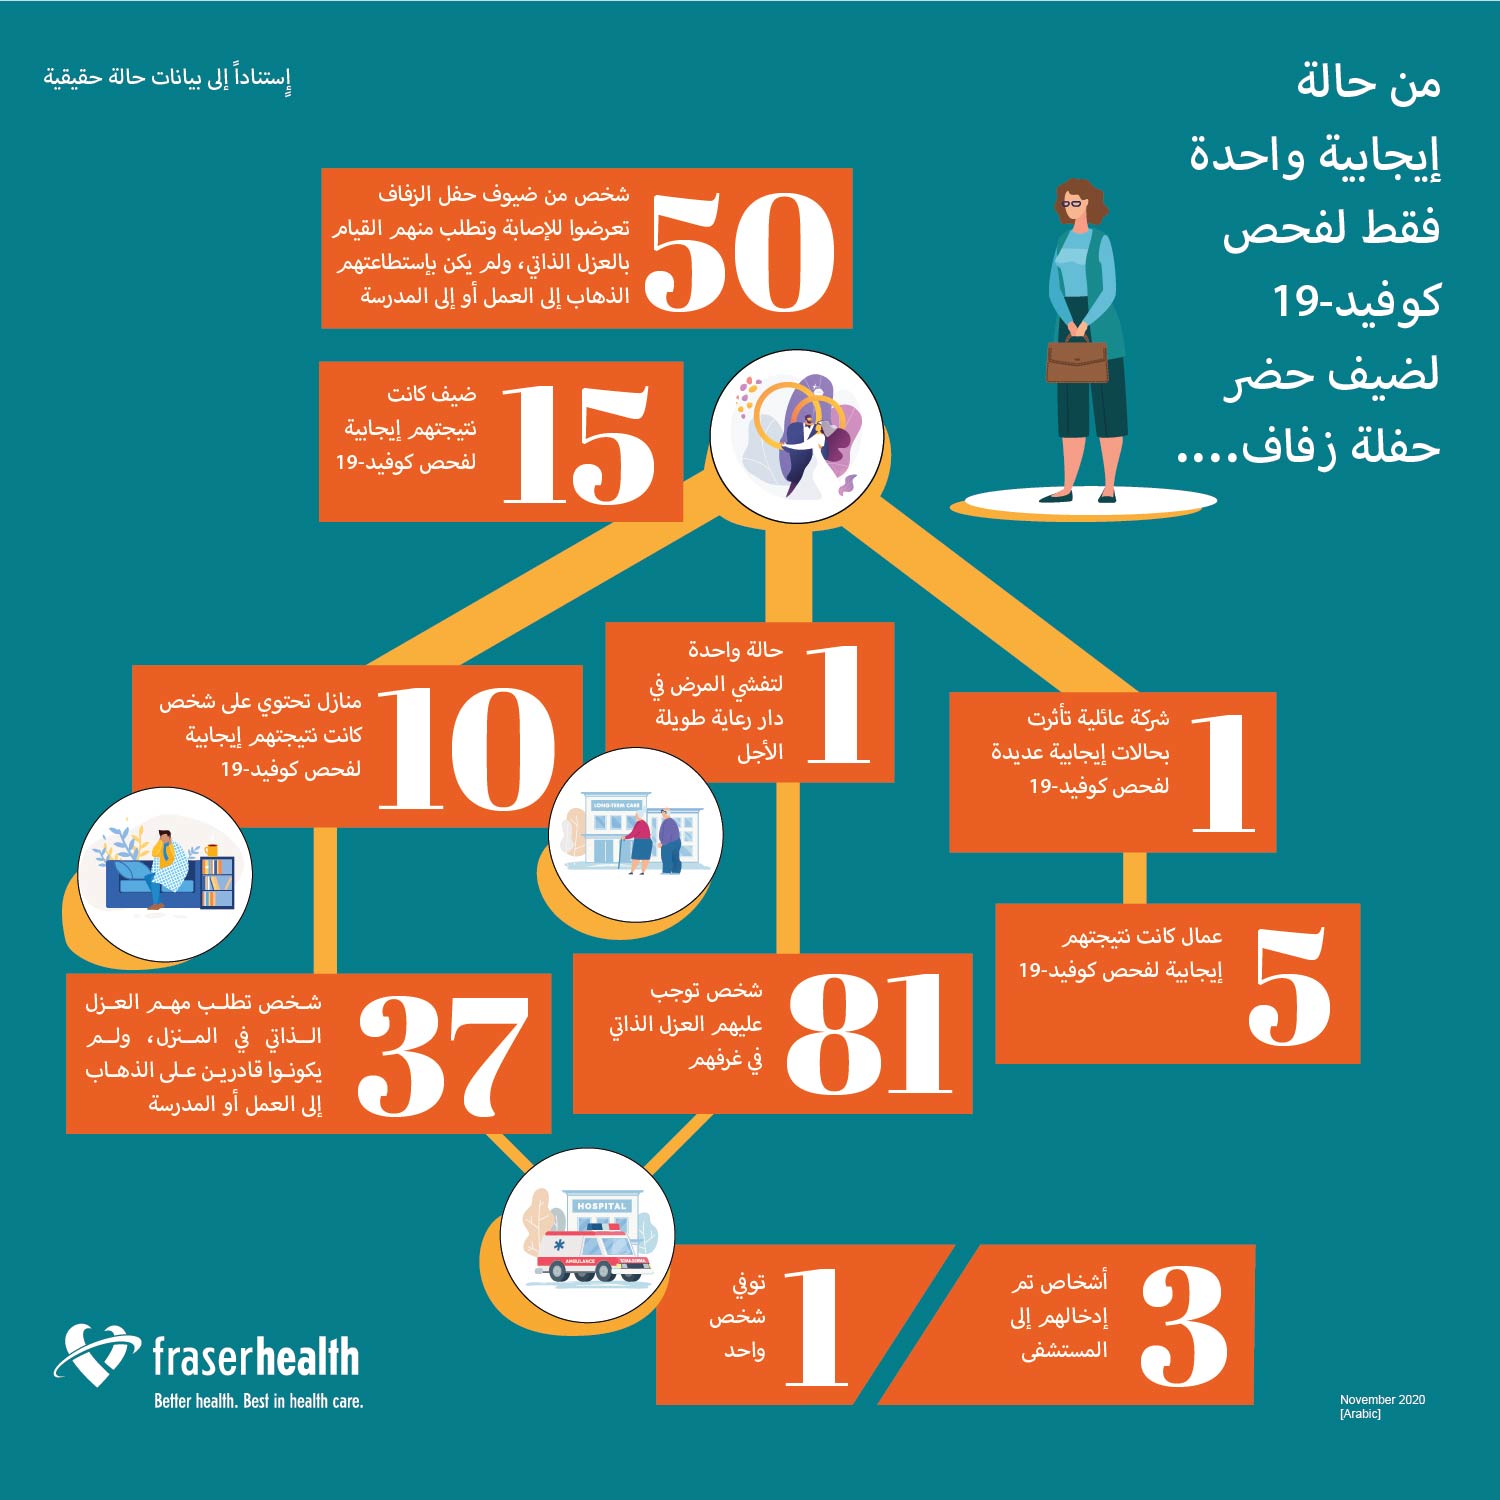 Wedding infographic in Arabic